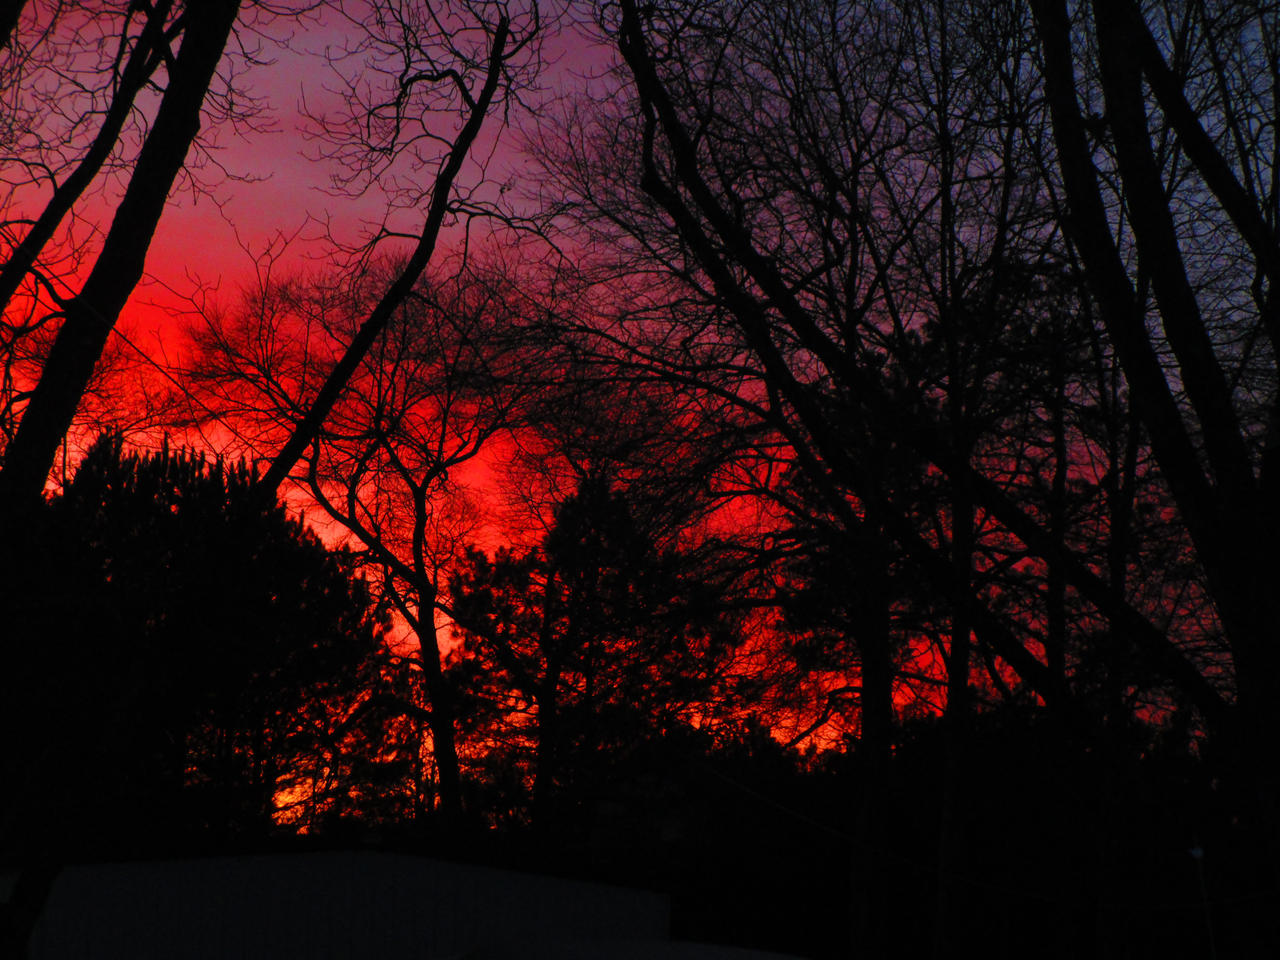 sunset colors of January by HomeOfBluAndshadows on DeviantArt